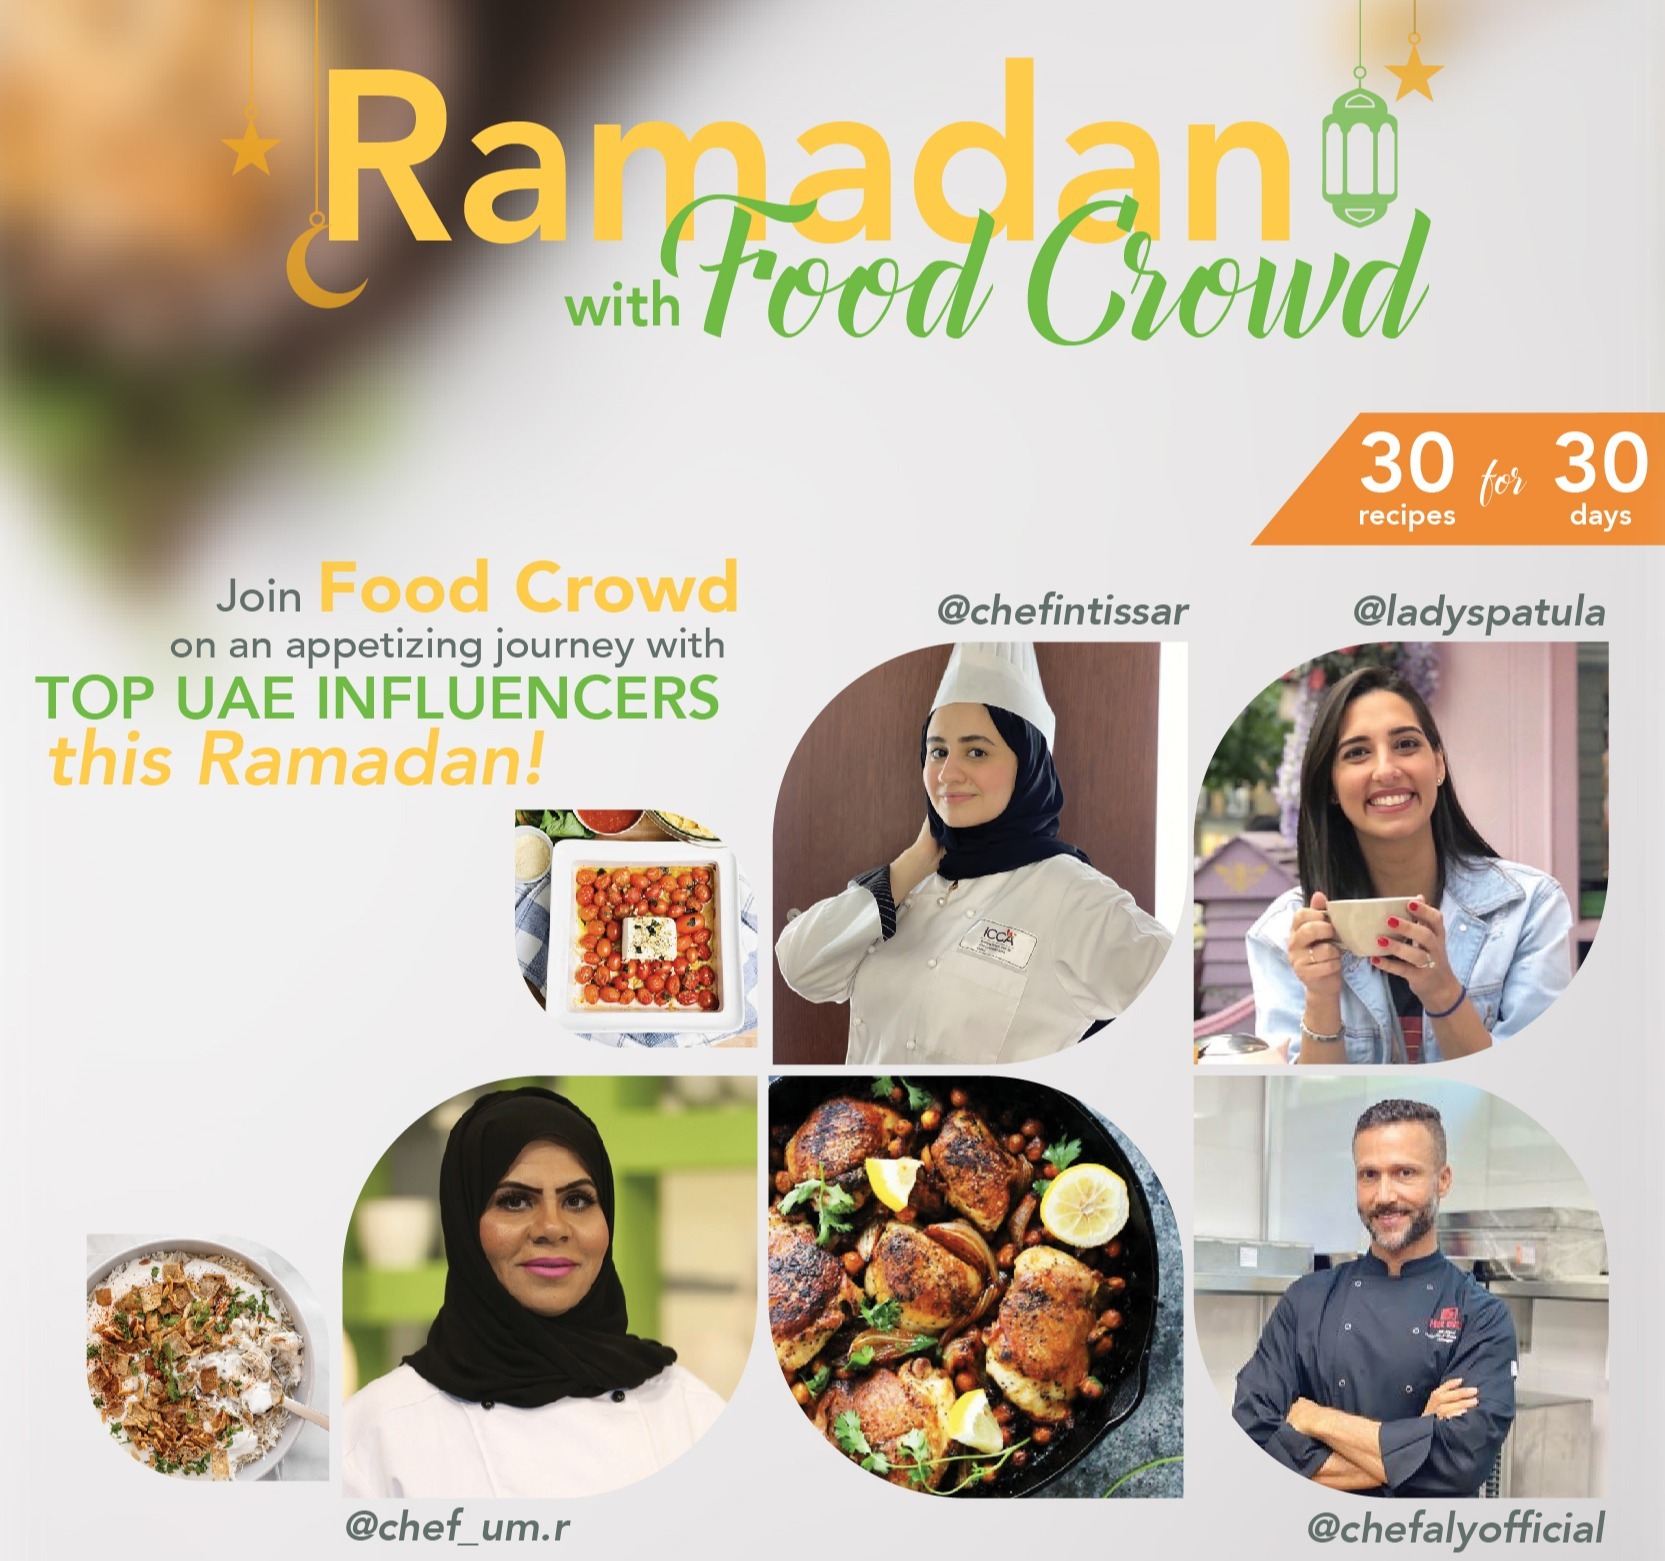 Food Crowd to host Ramadan Cooking series